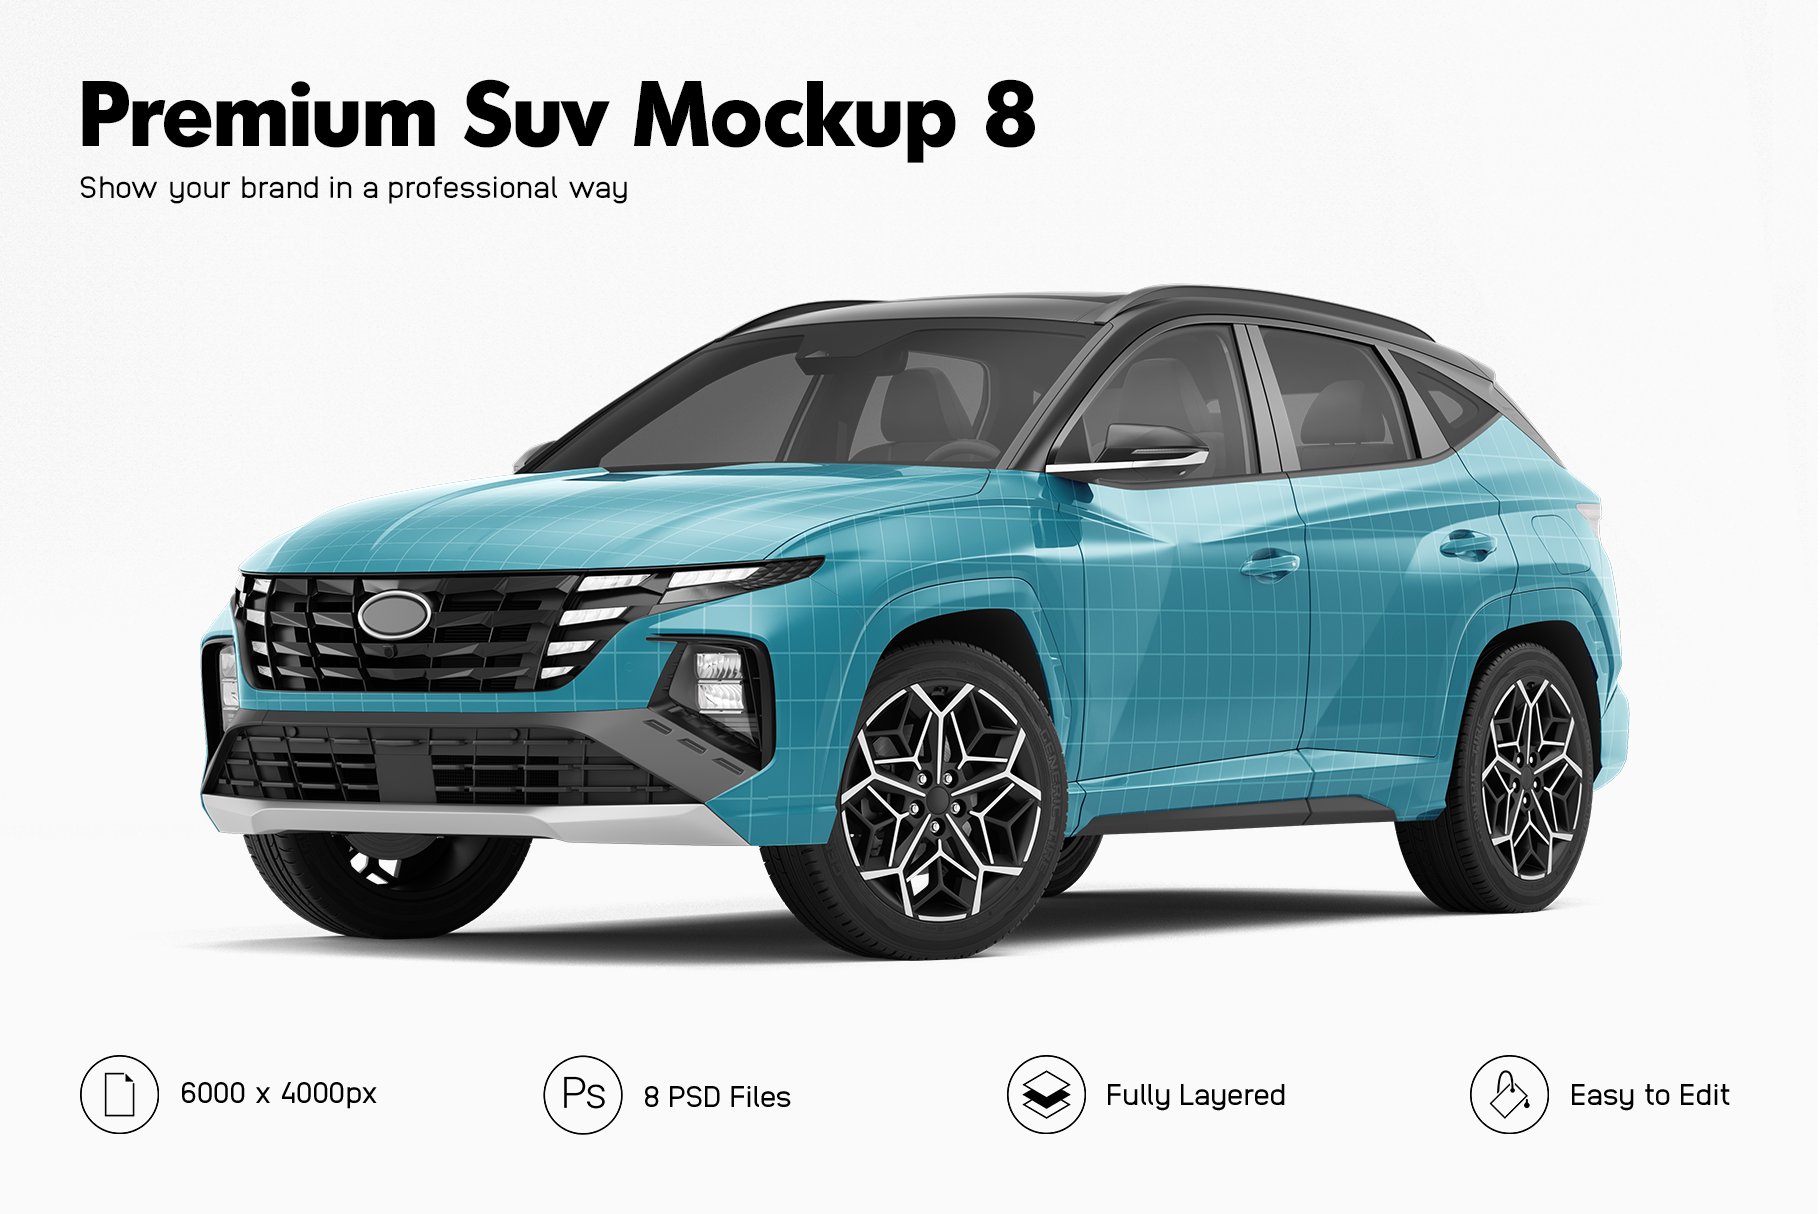 Premium Suv Mockup 8 cover image.